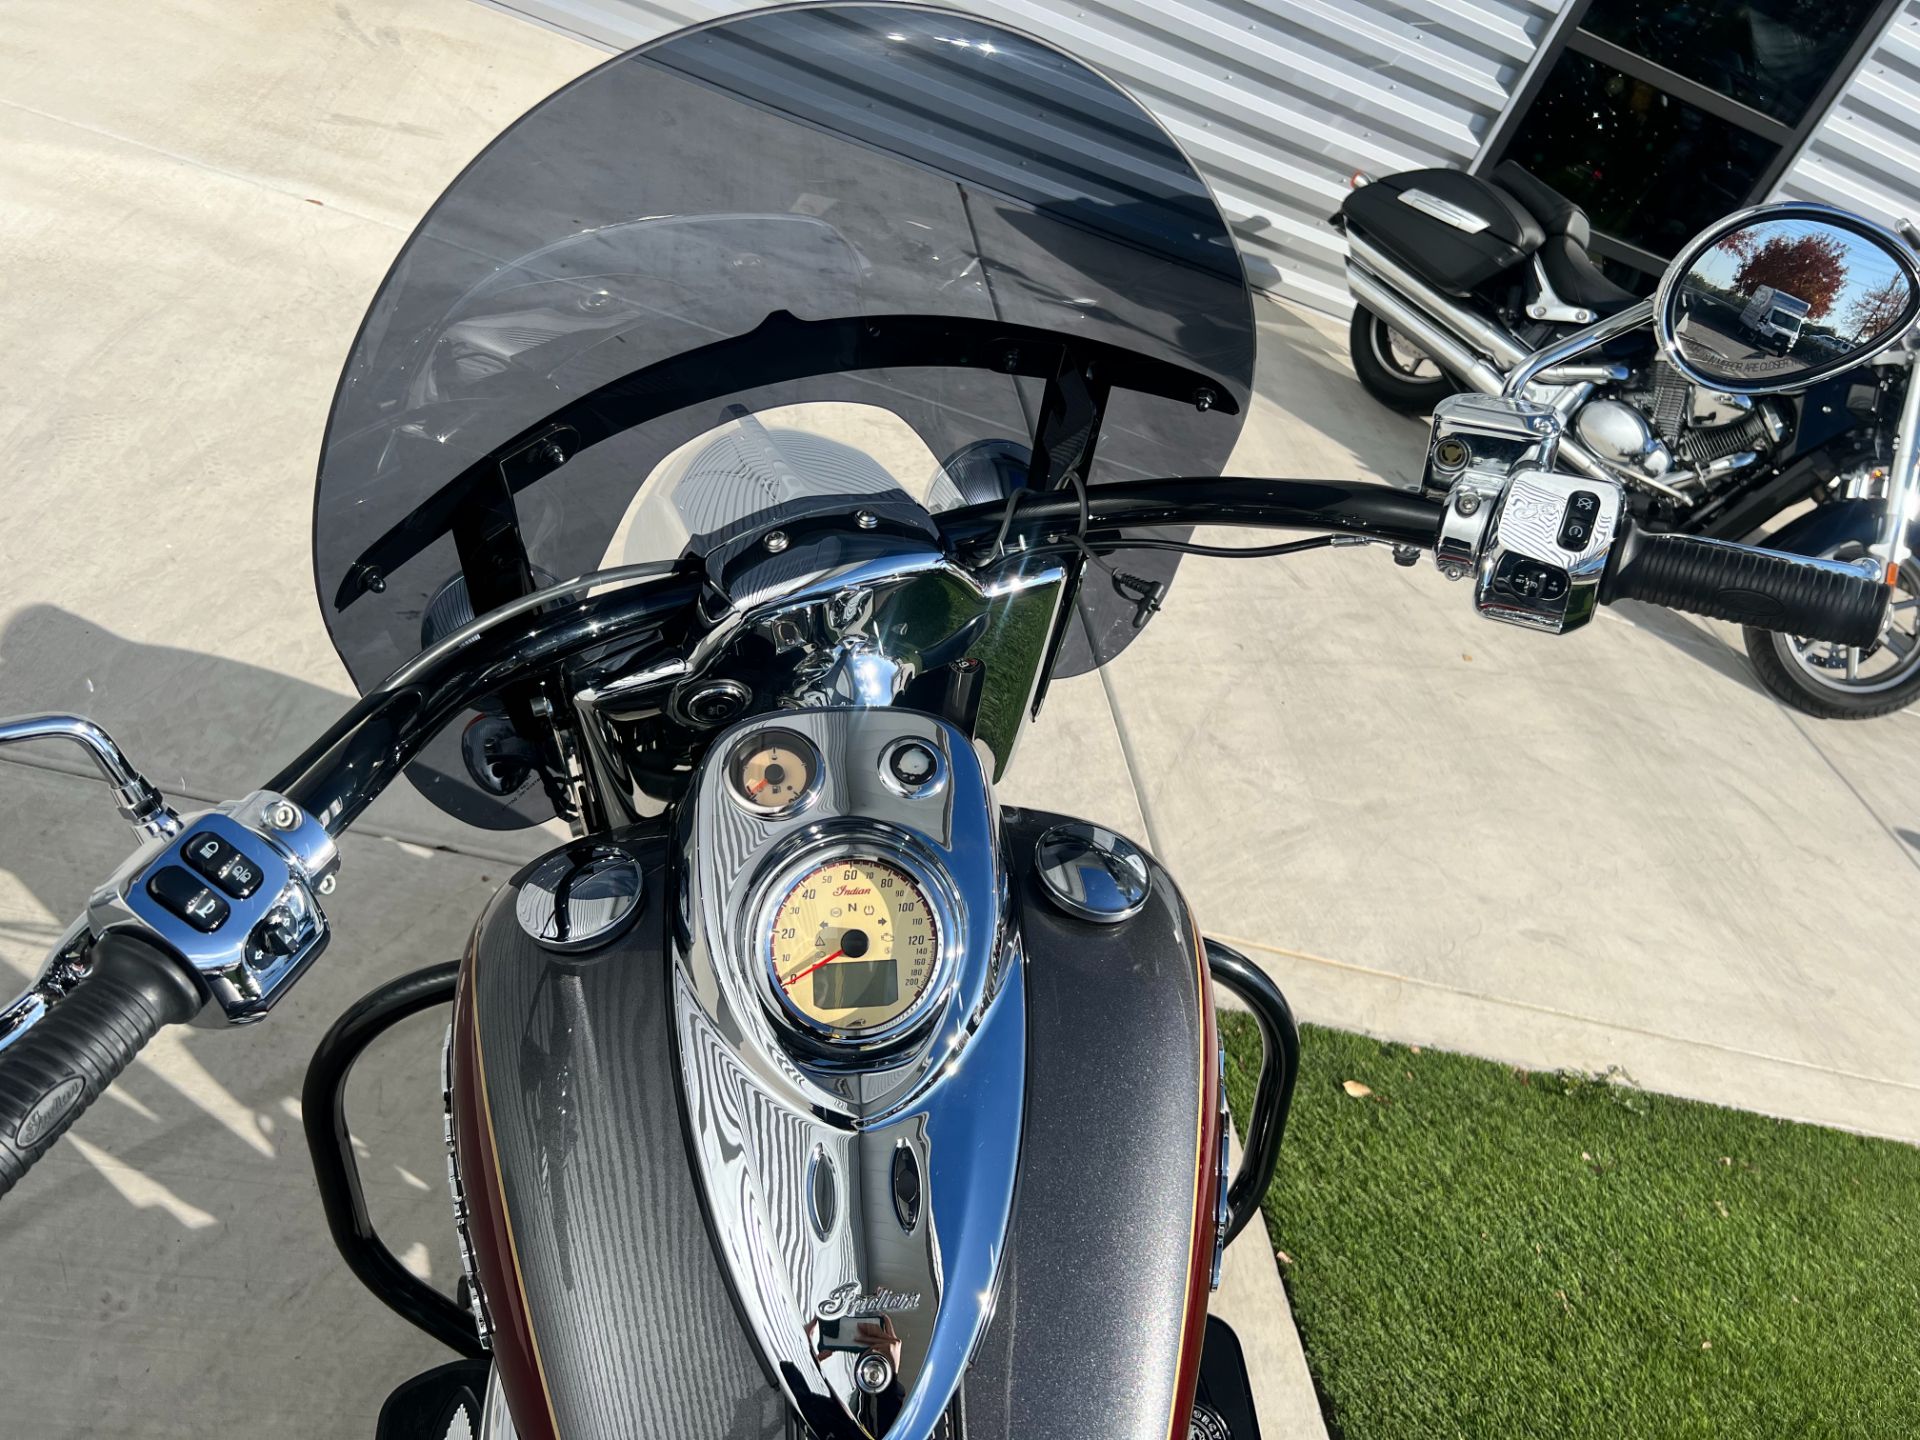 2018 Indian Motorcycle Springfield® ABS in Elk Grove, California - Photo 5